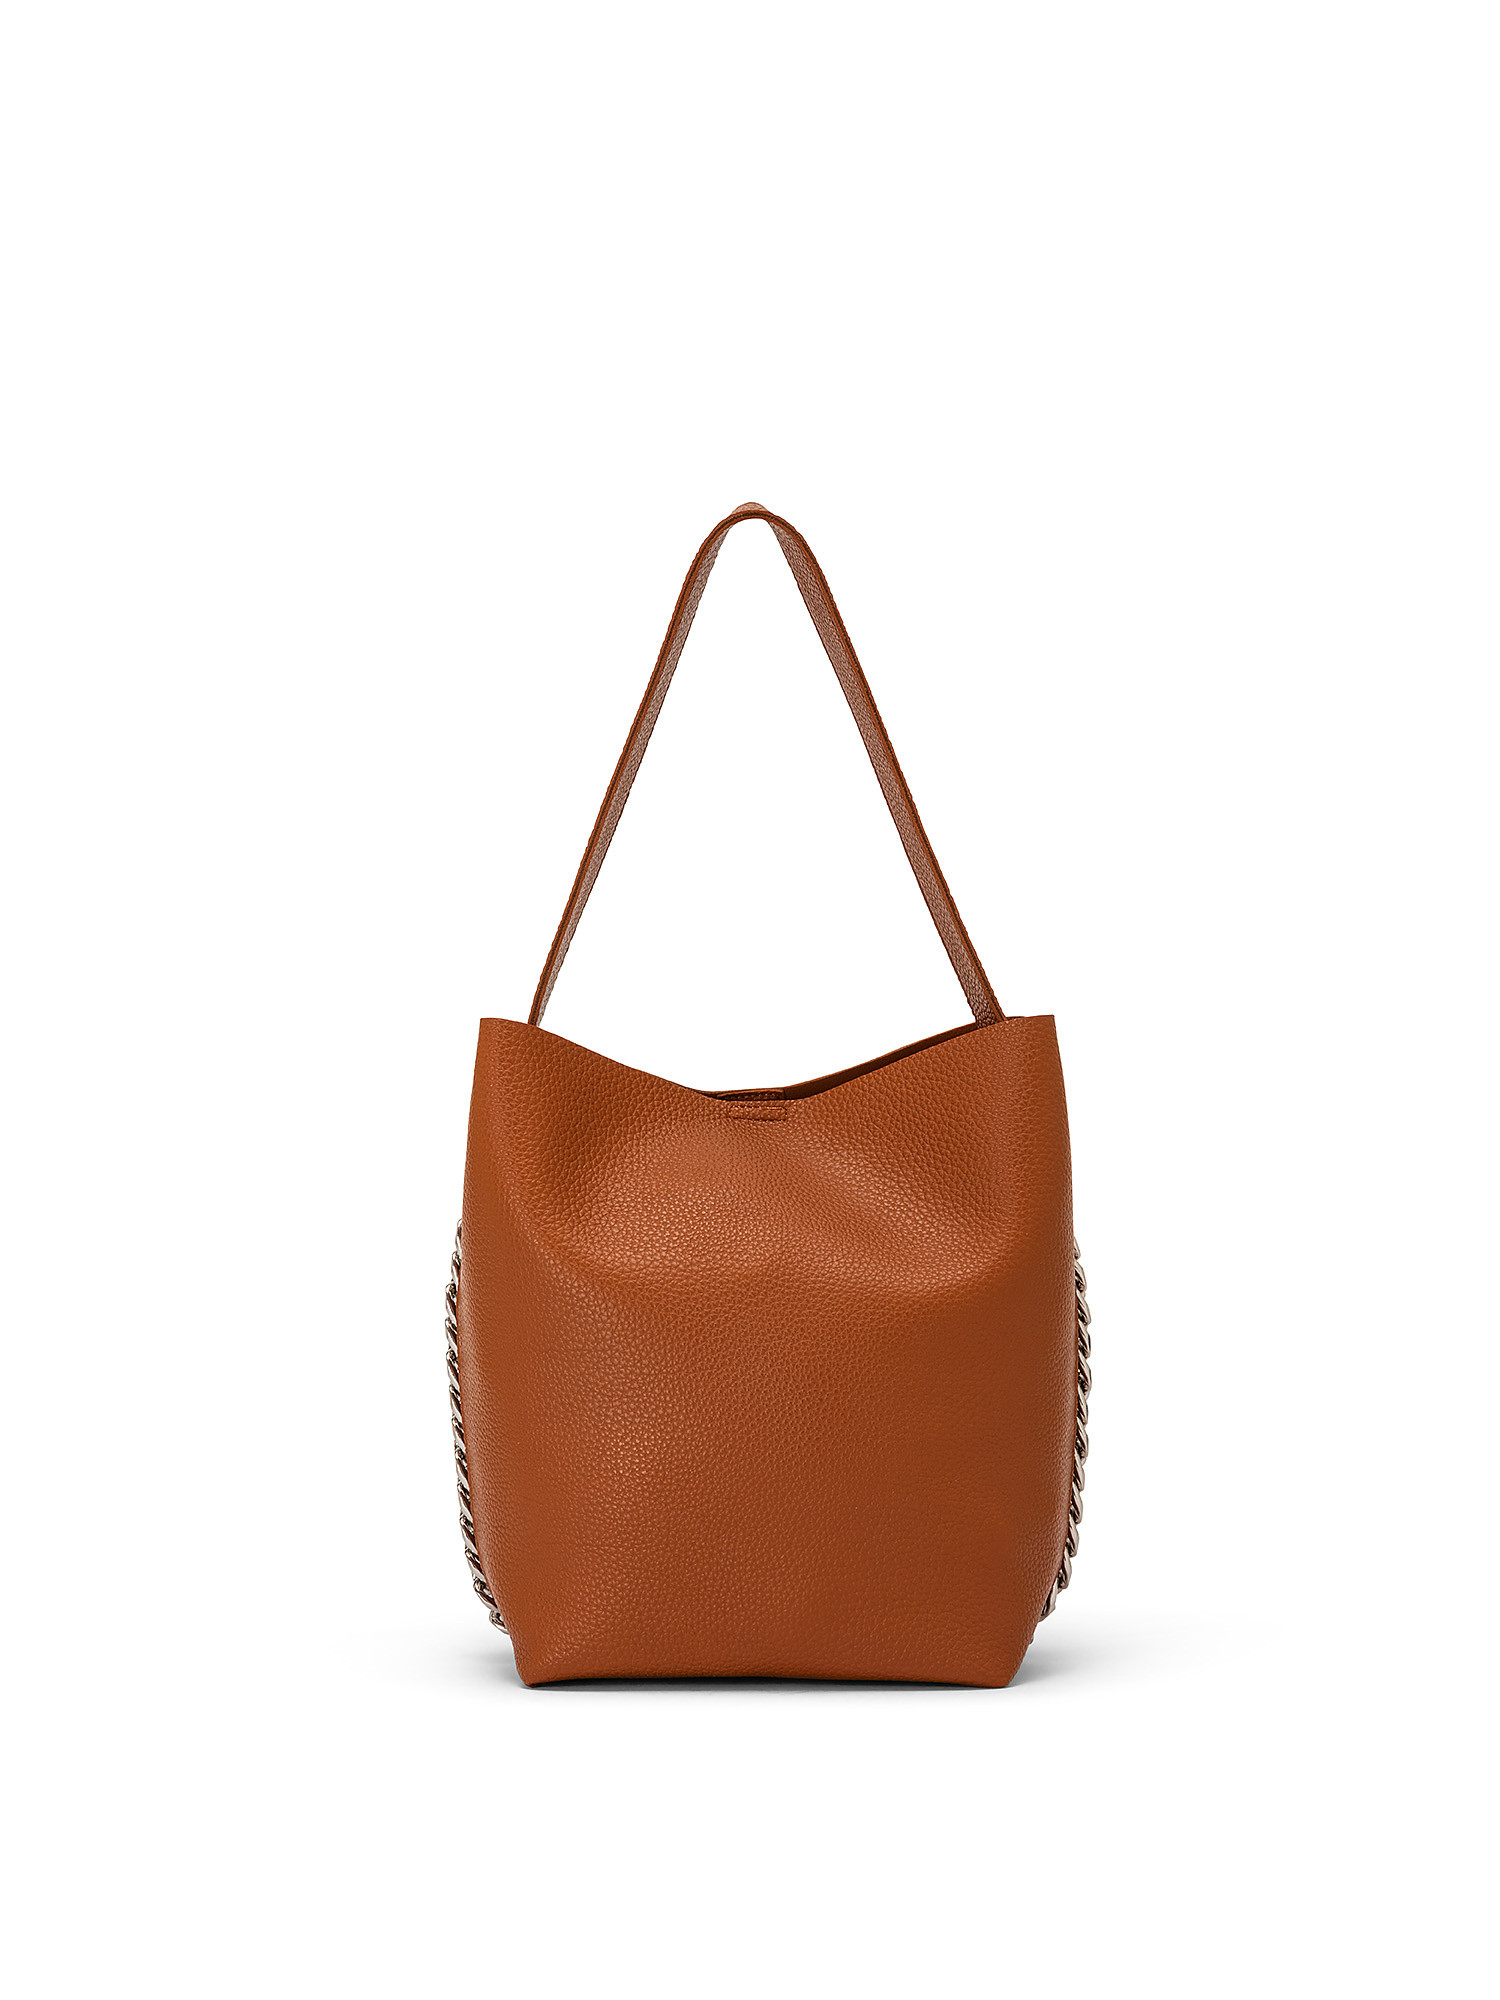 Hobo bag, Leather Brown, large image number 0